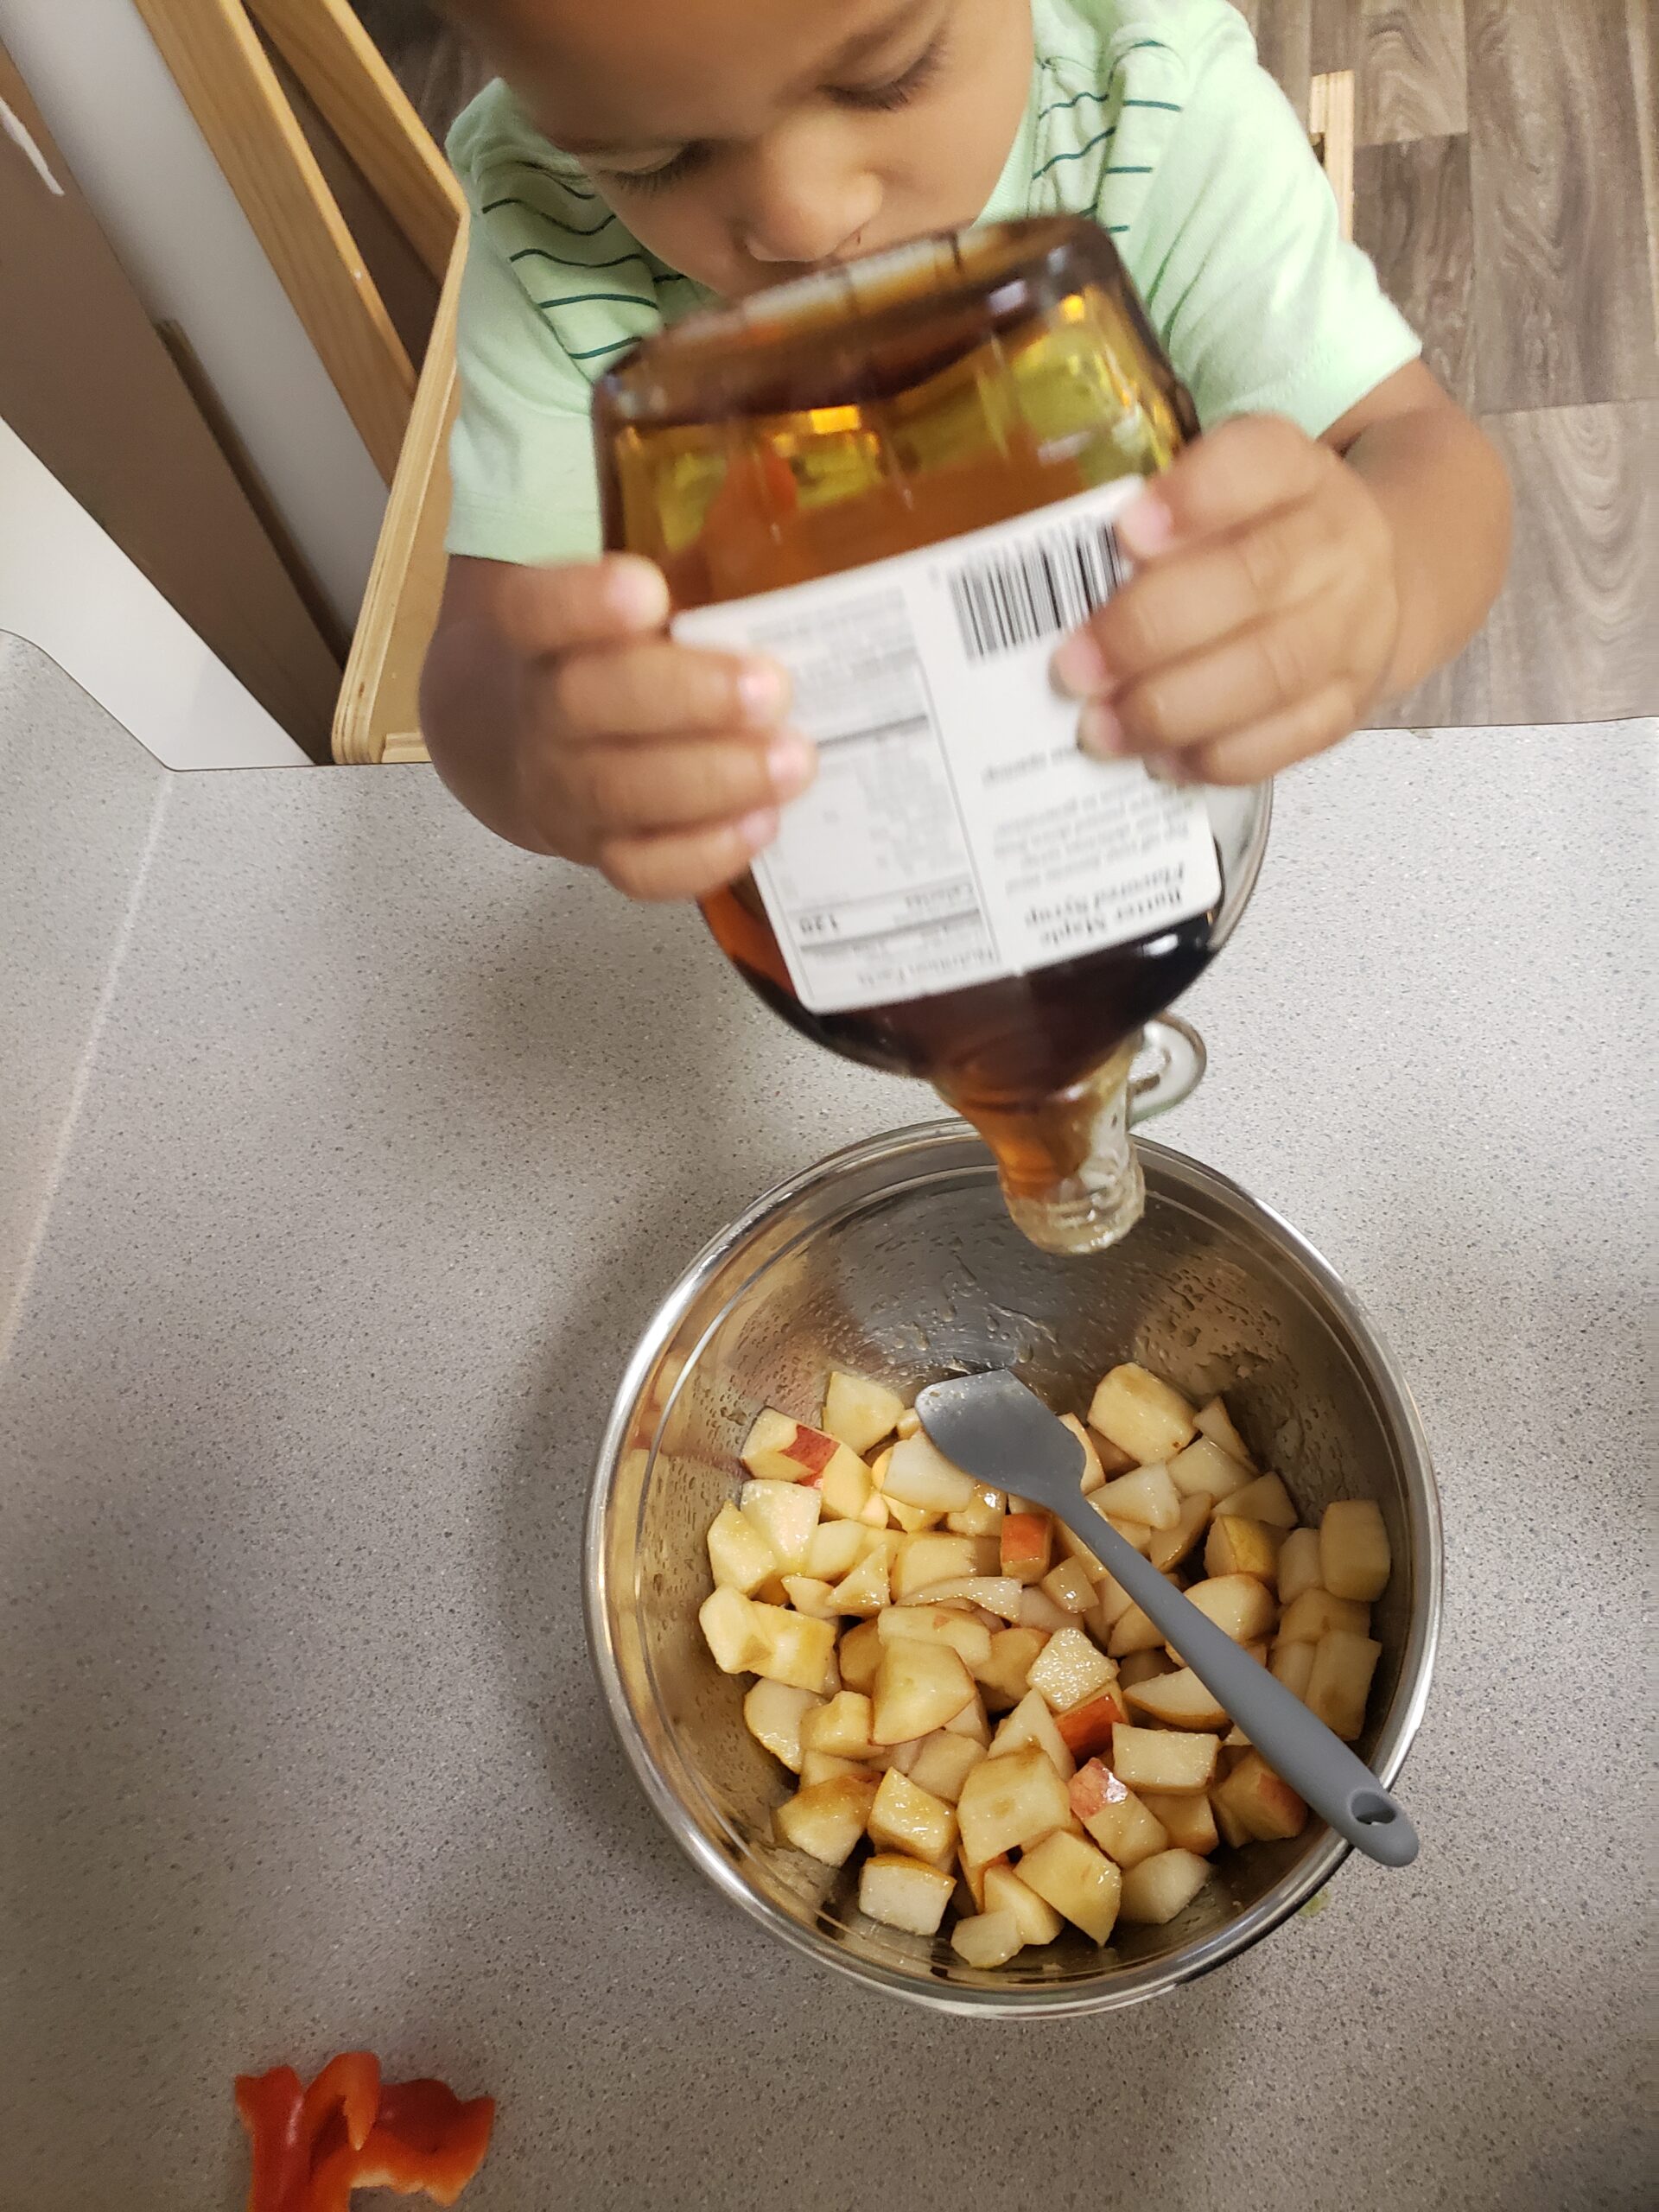 adding maple syrup